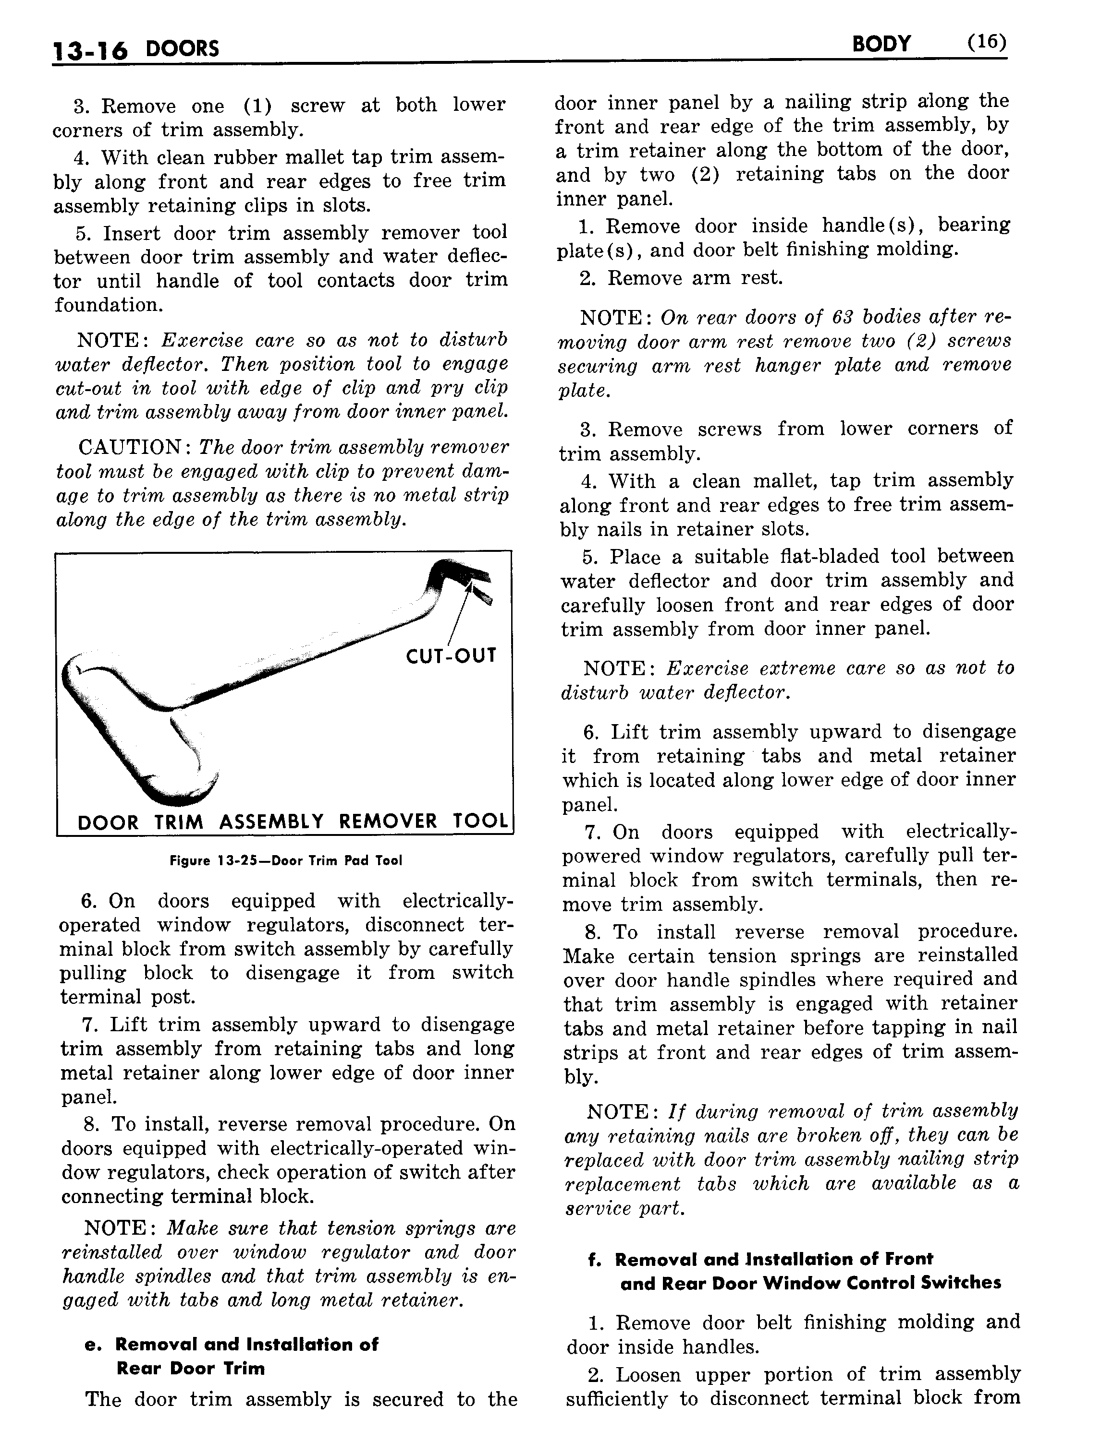 n_1957 Buick Body Service Manual-018-018.jpg